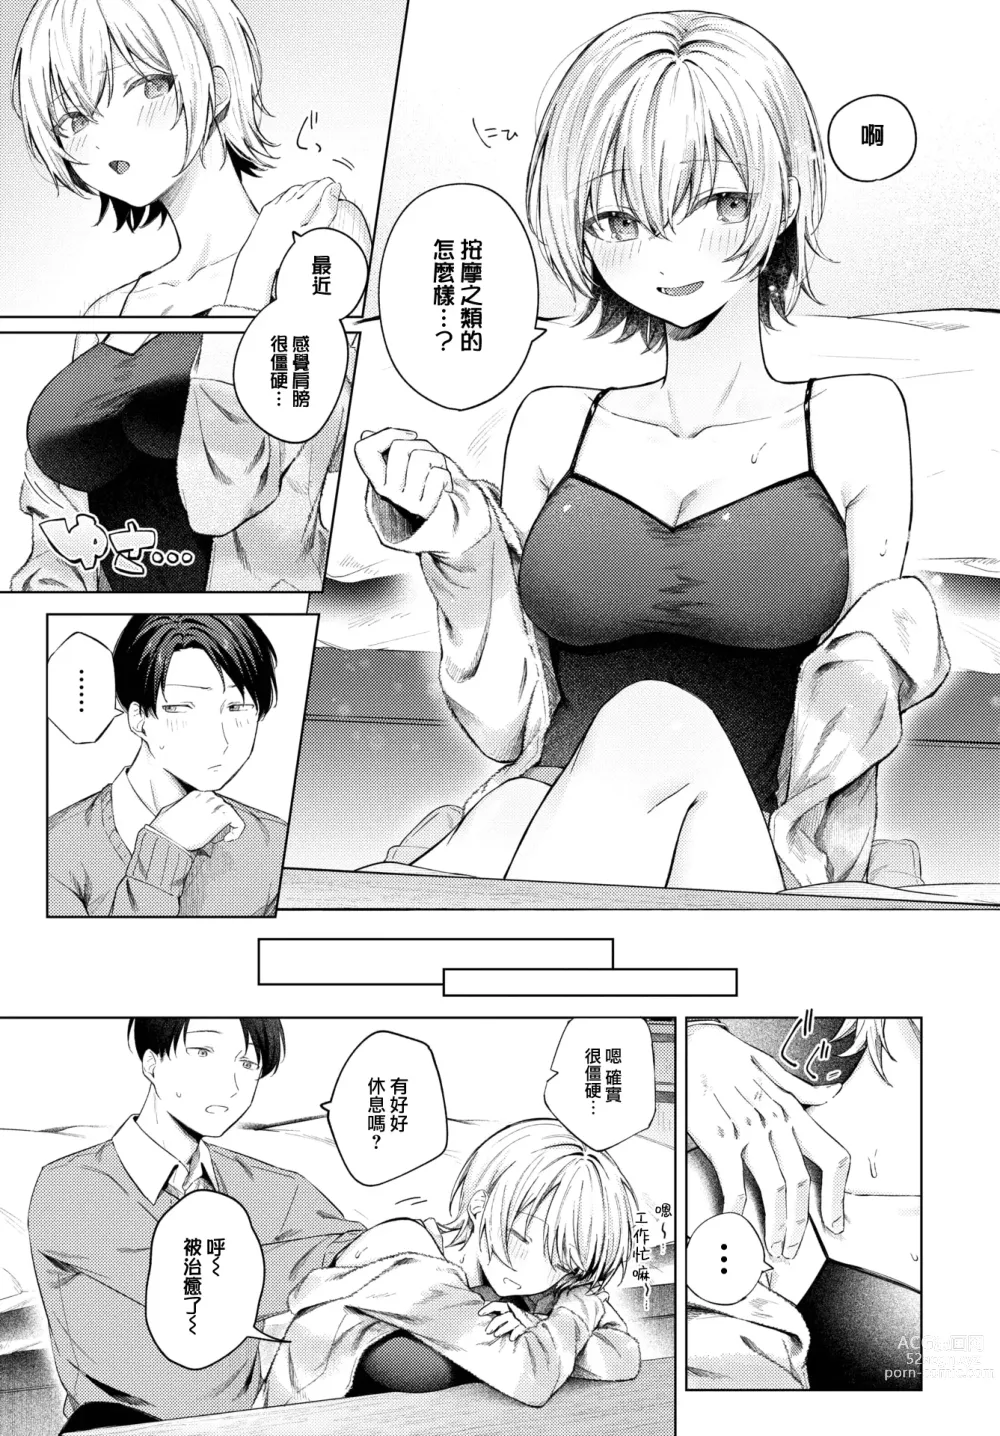 Page 6 of manga Fuyugomori